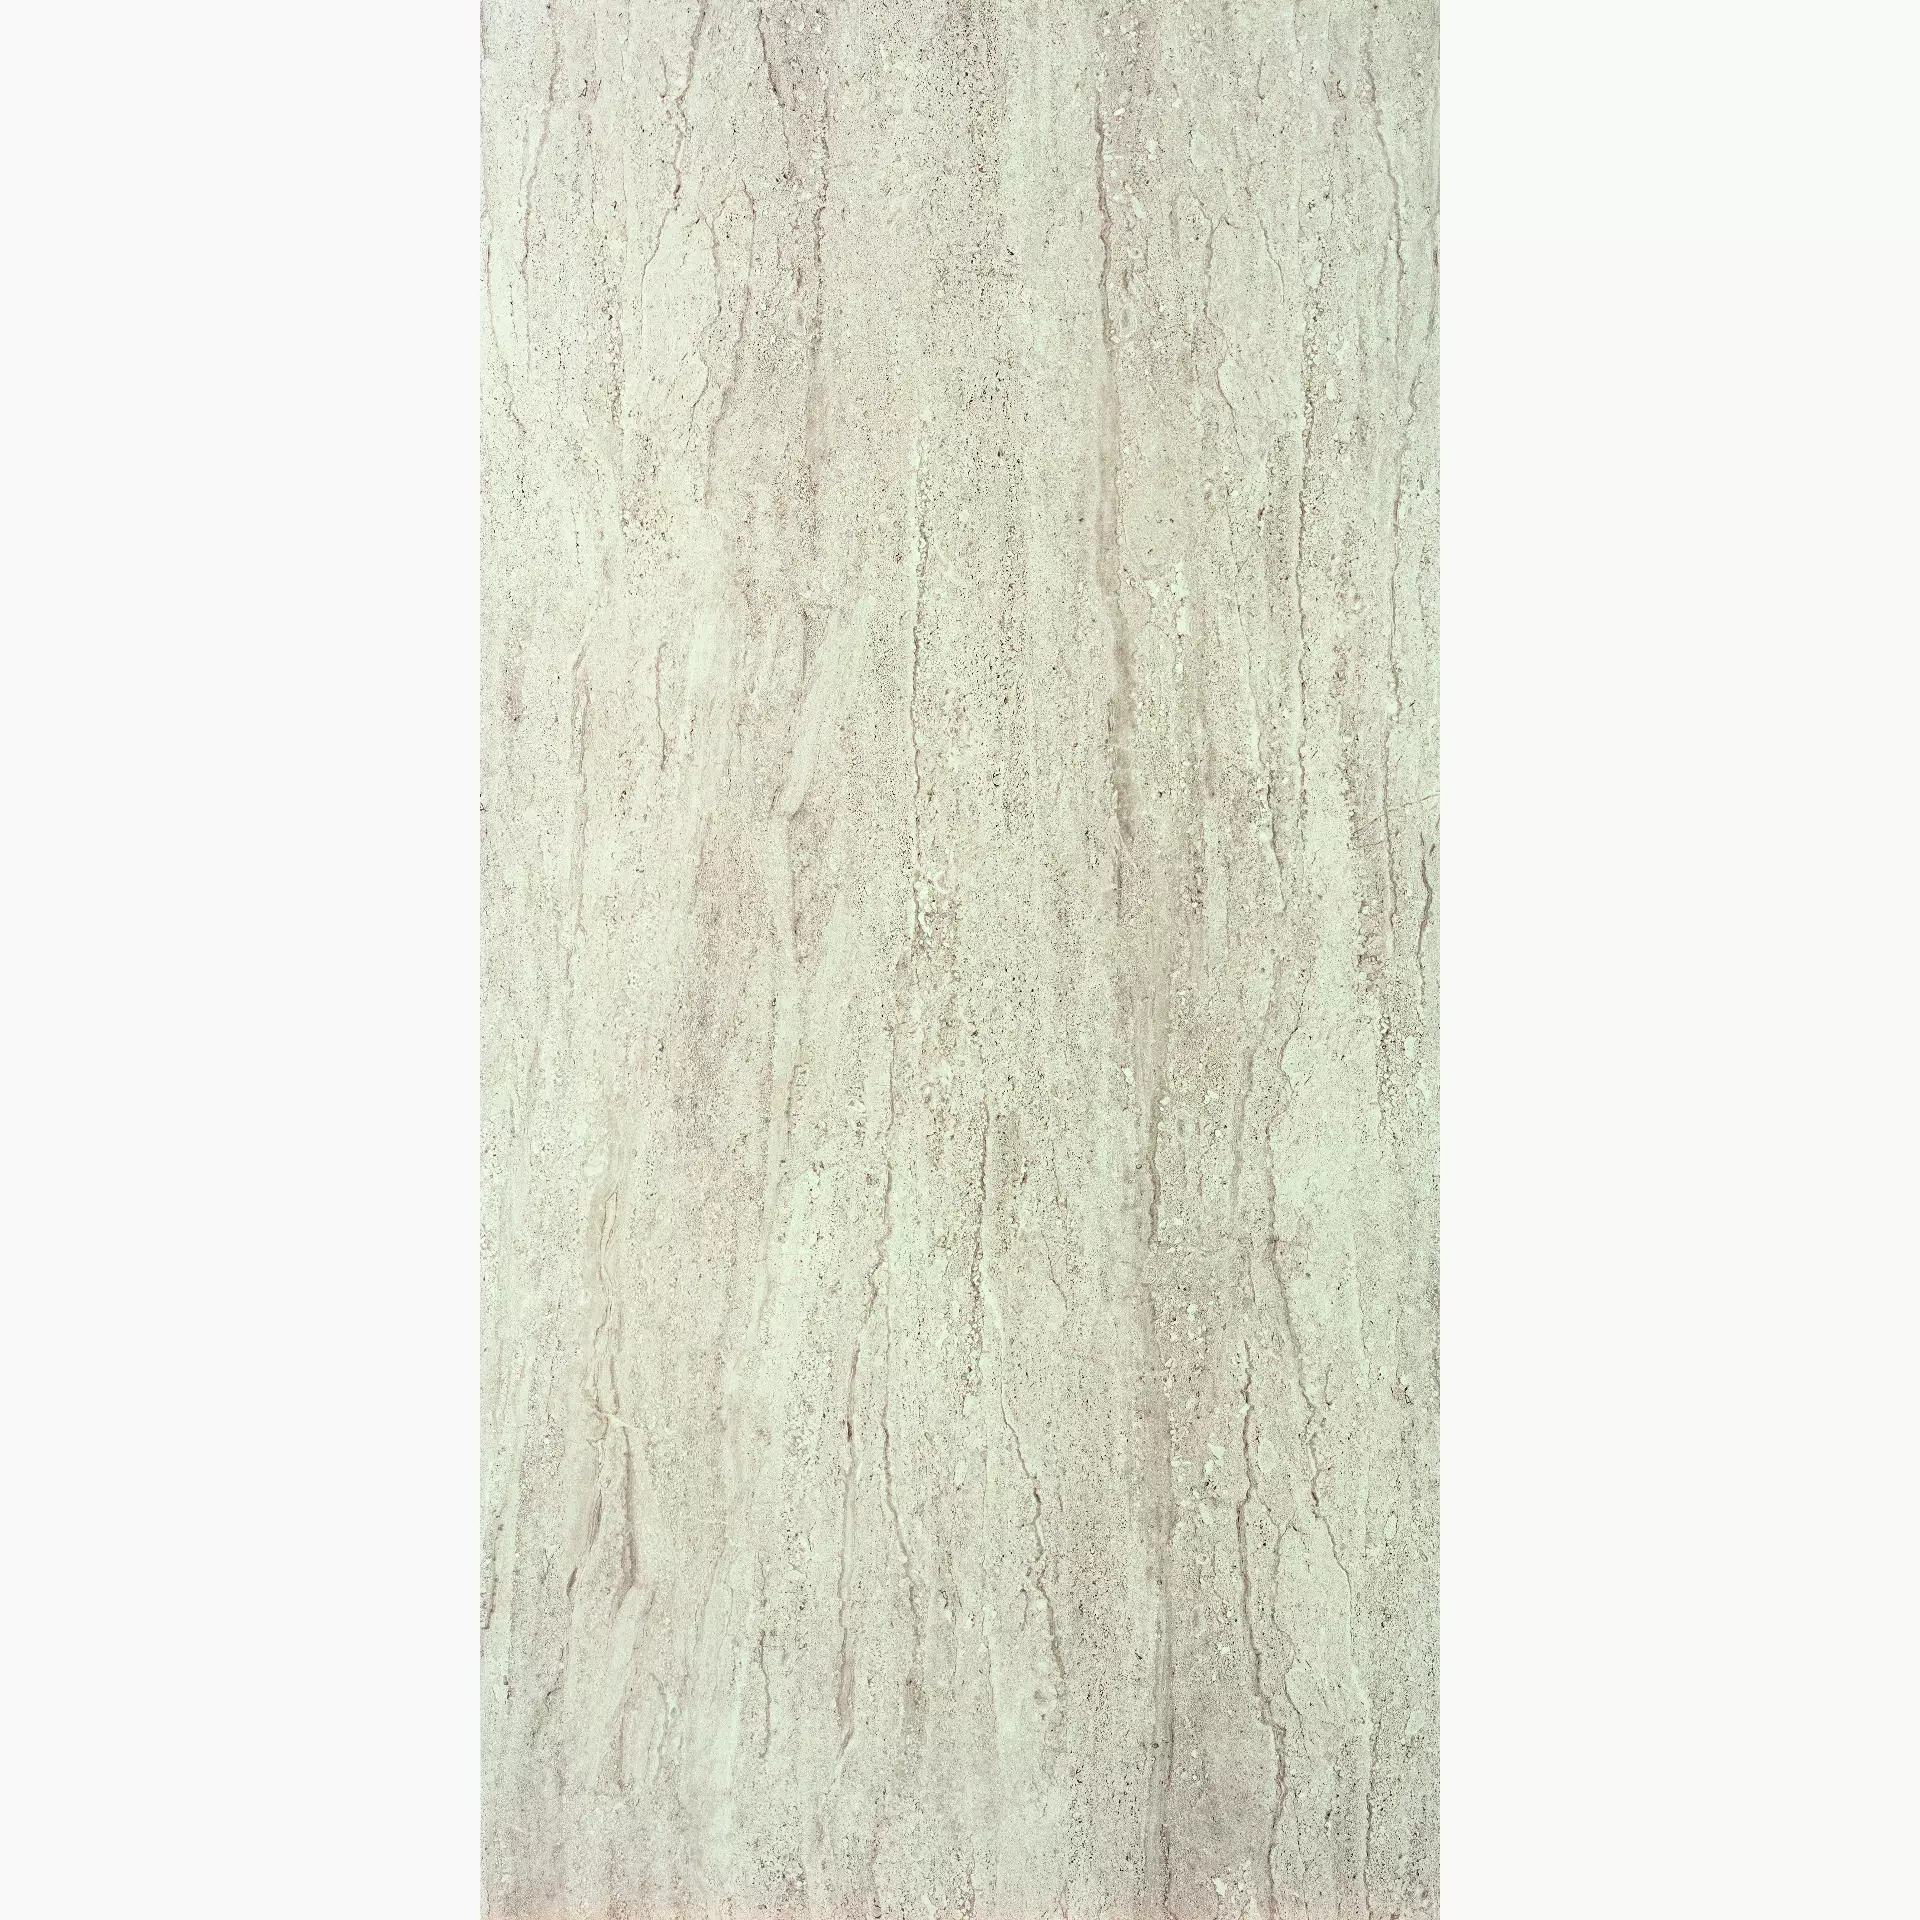 Serenissima Travertini Due Bianco Naturale 1072920 60x120cm rectified 9,5mm